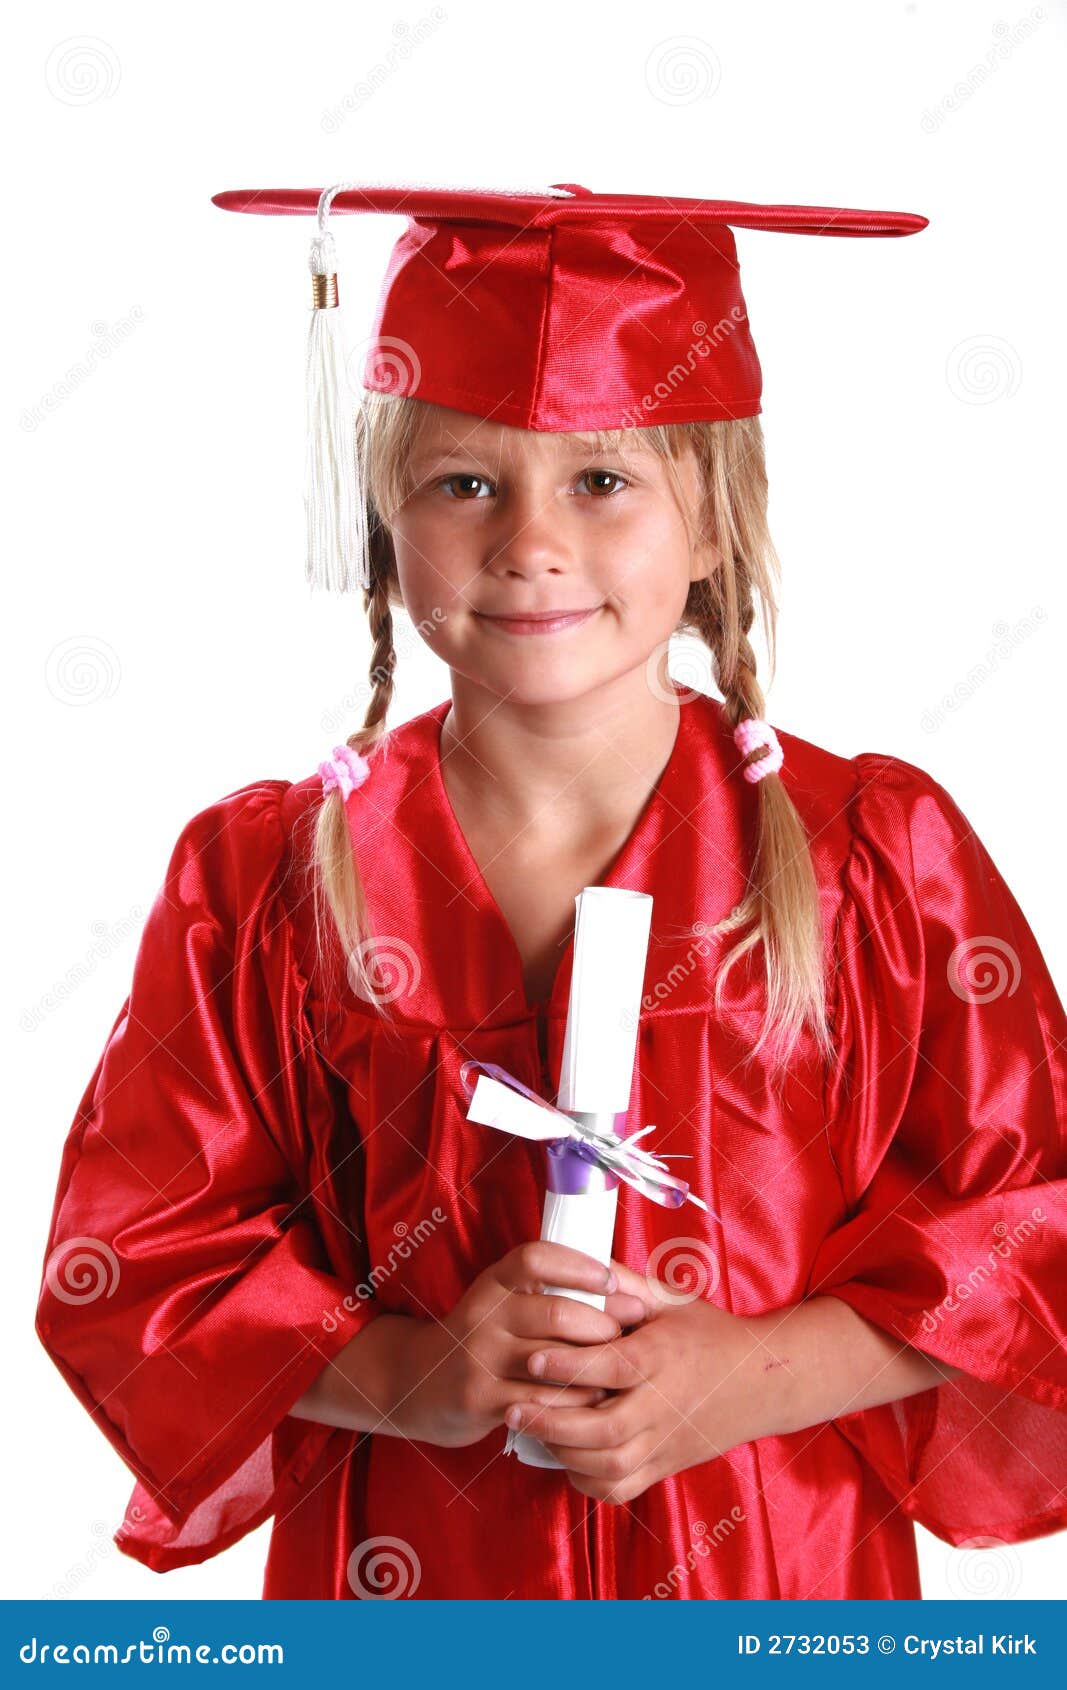 Adorable graduation kid